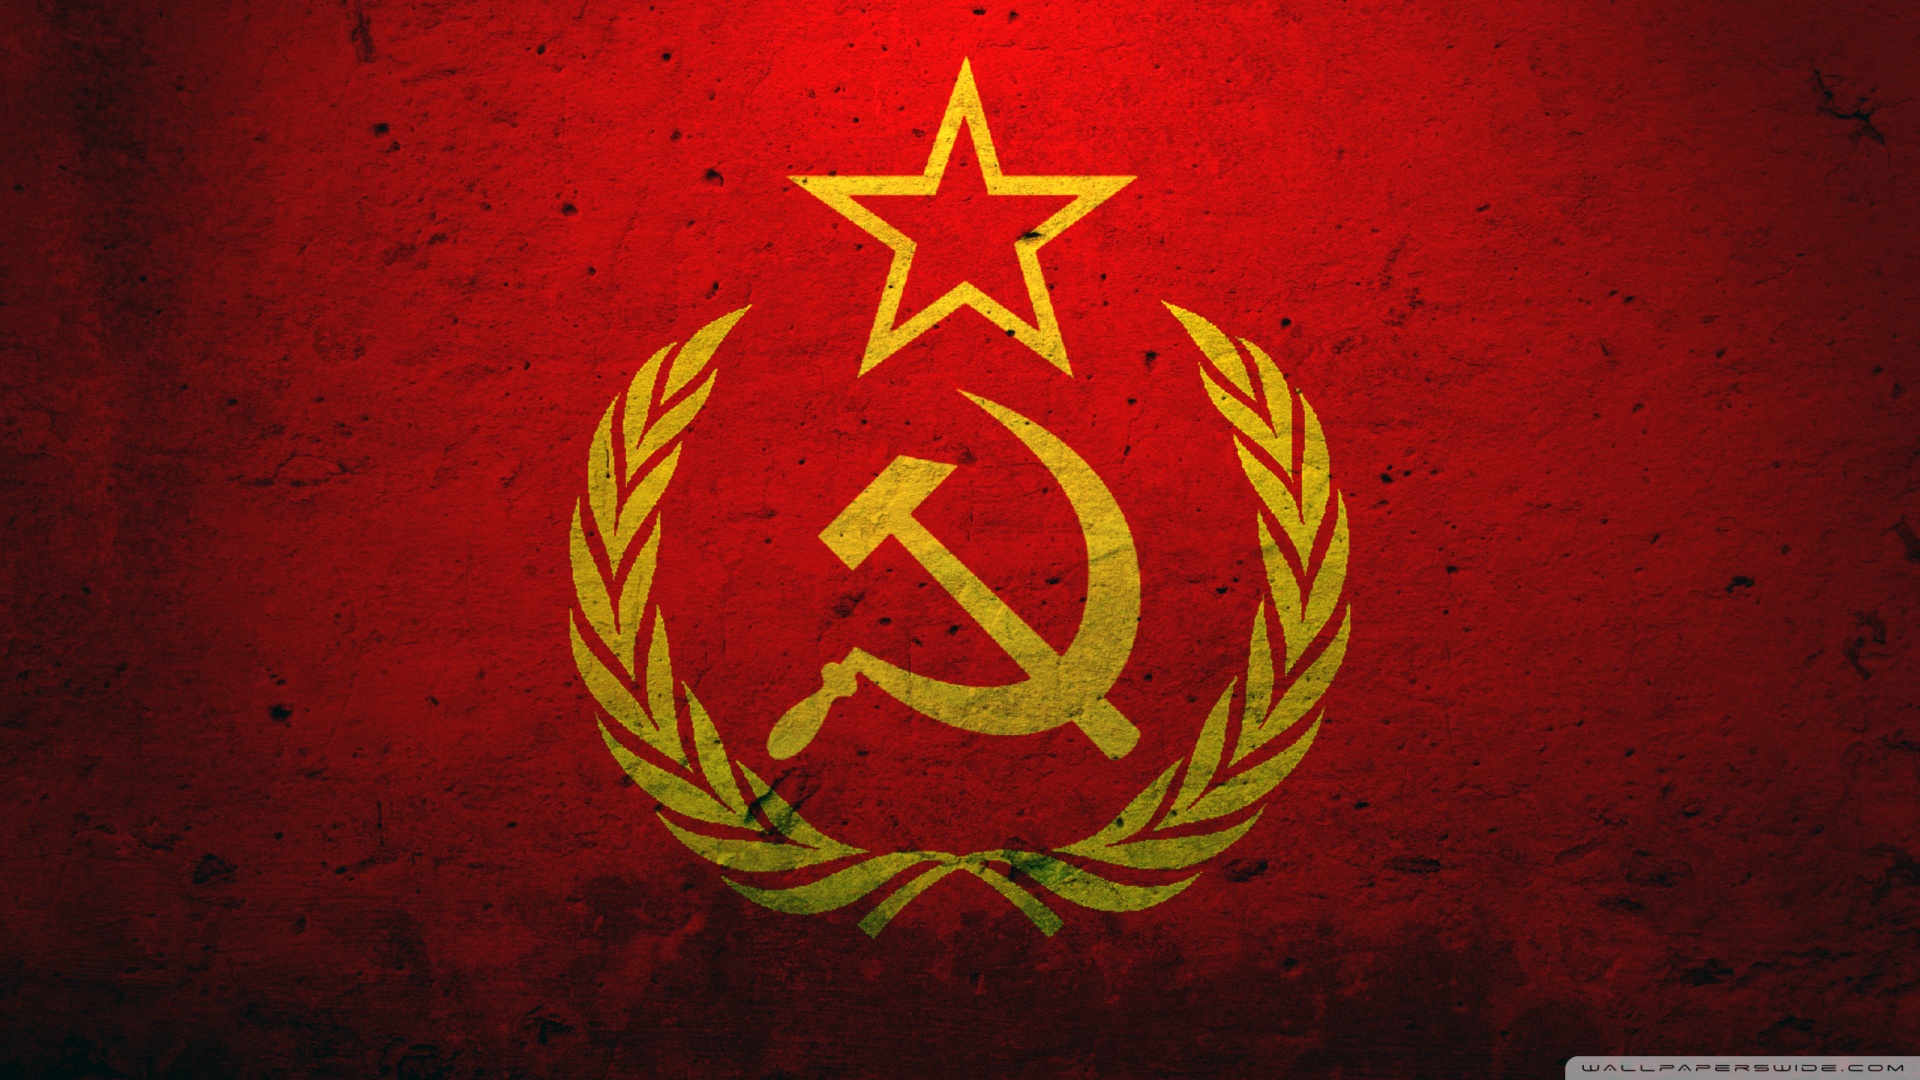  Soviet Union Wallpaper 1920x1080 Grunge Flag Of The Soviet Union